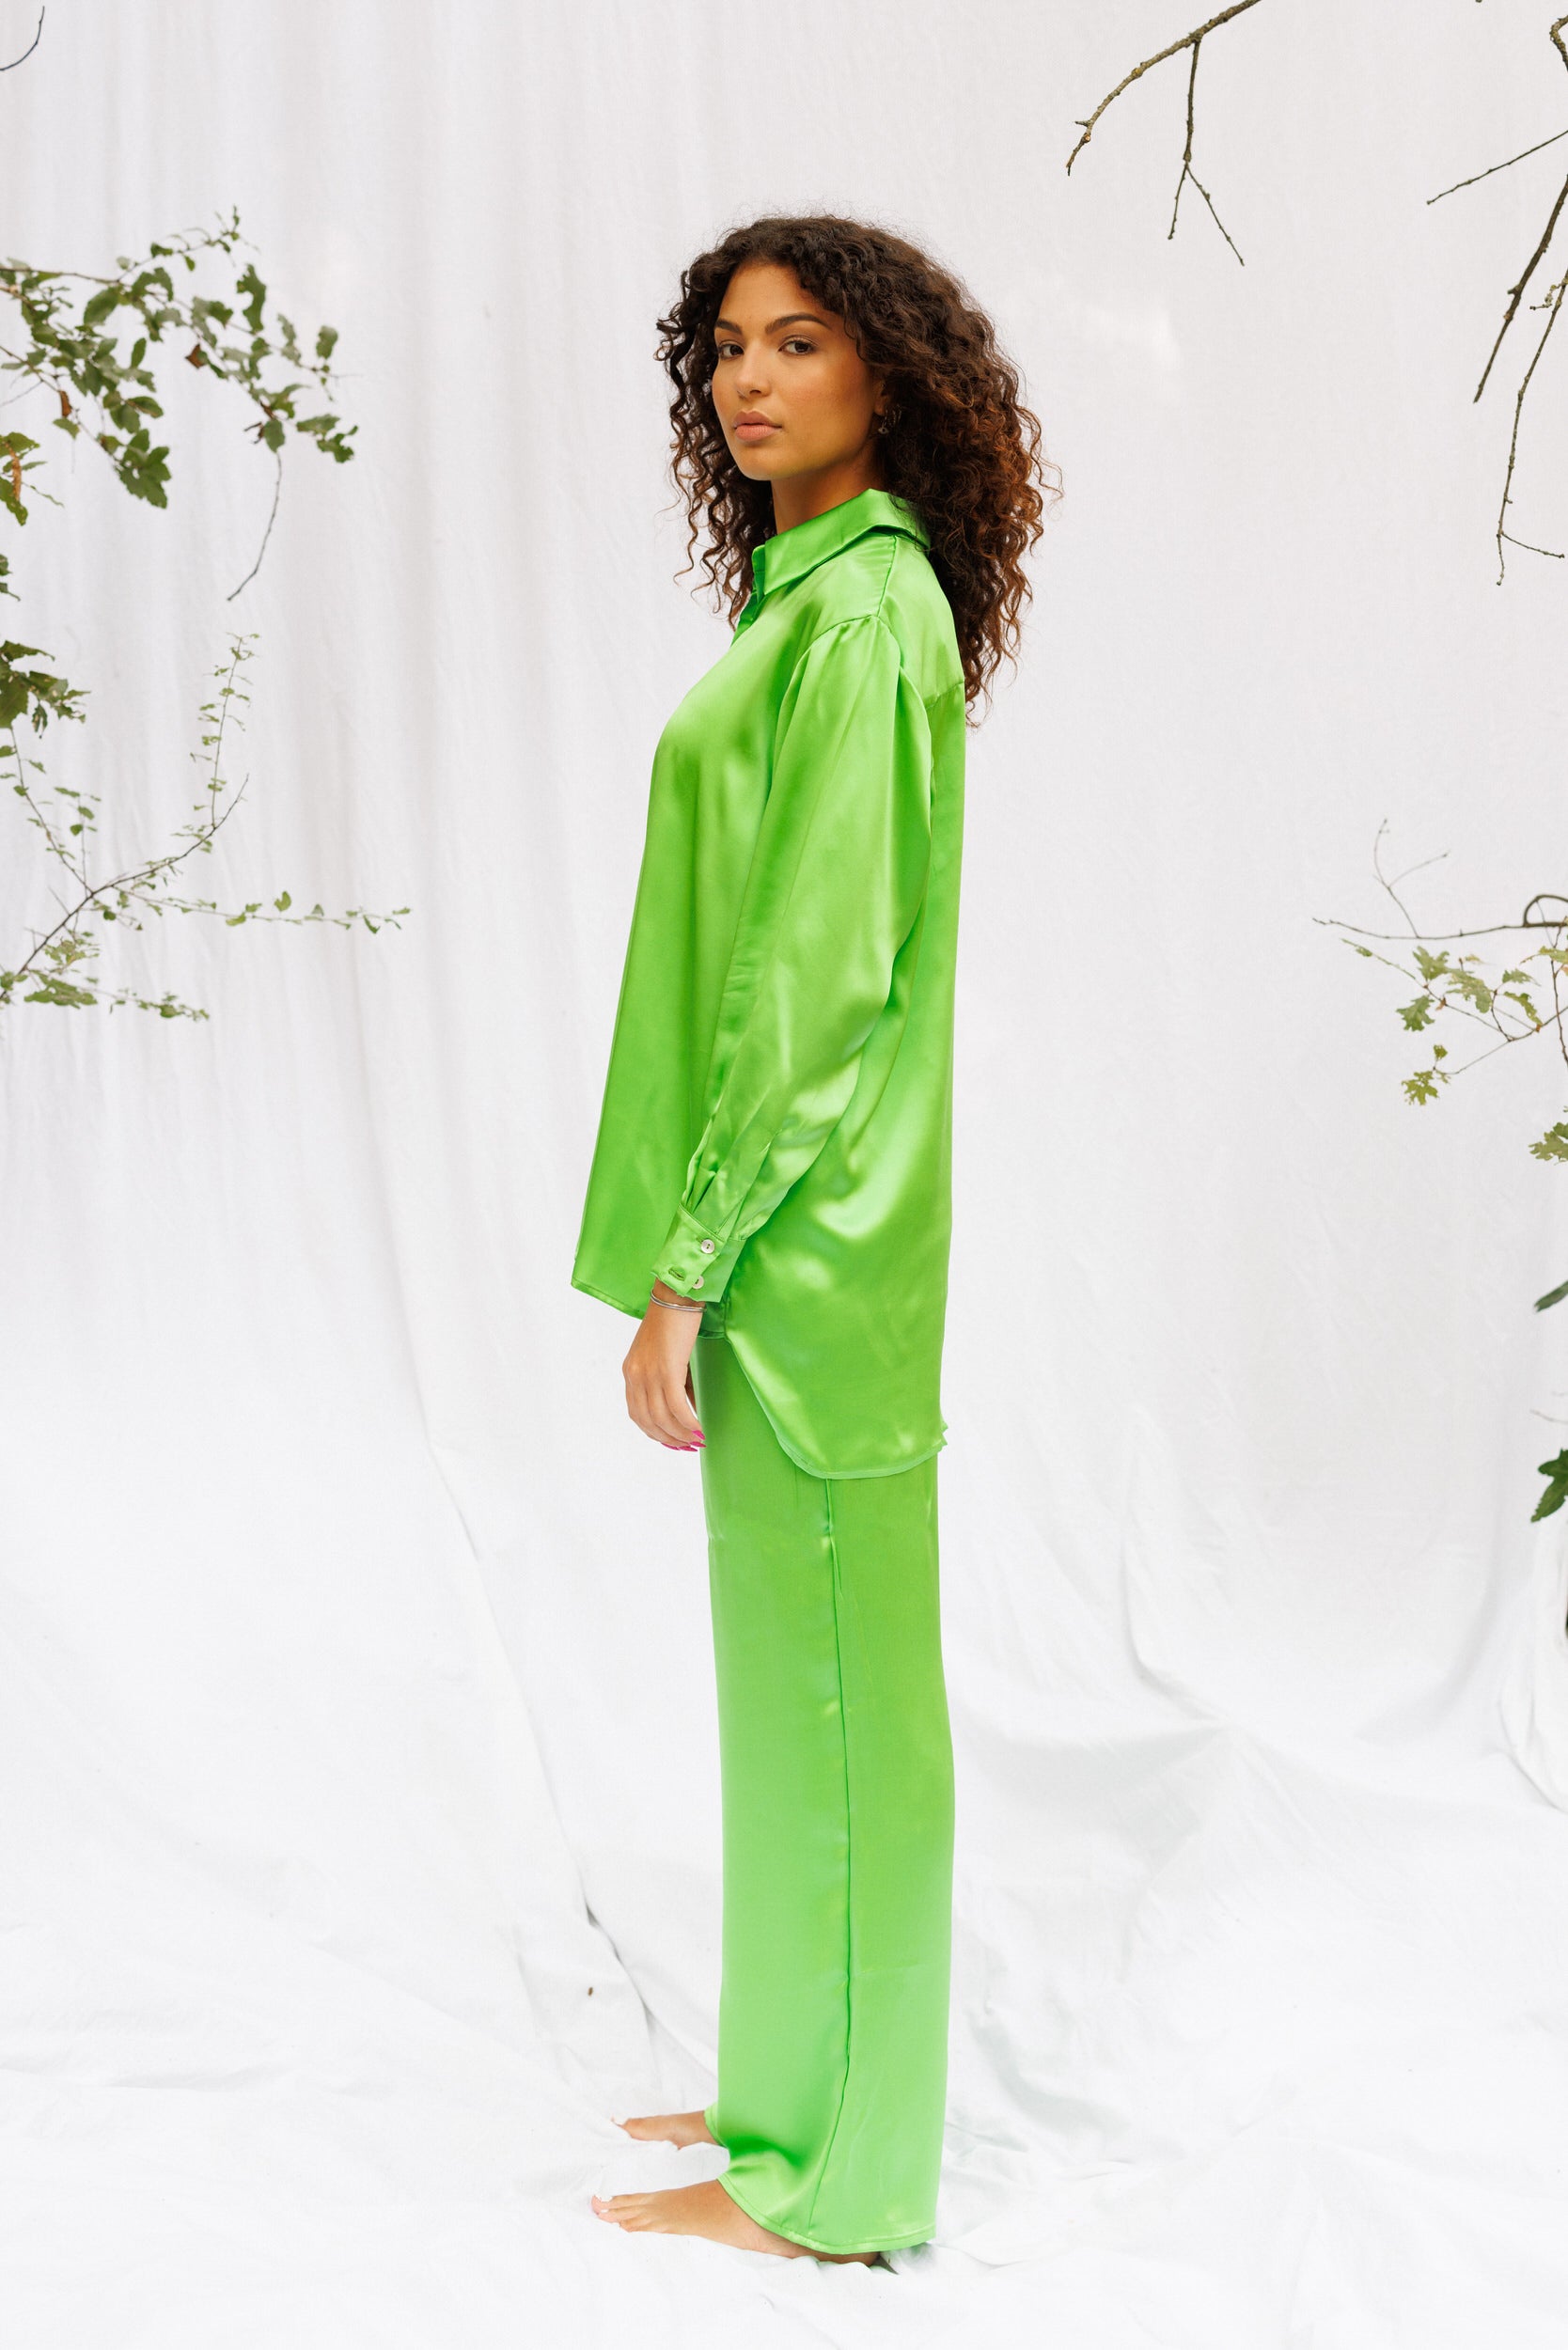 Side image of Maria wearing green silk set